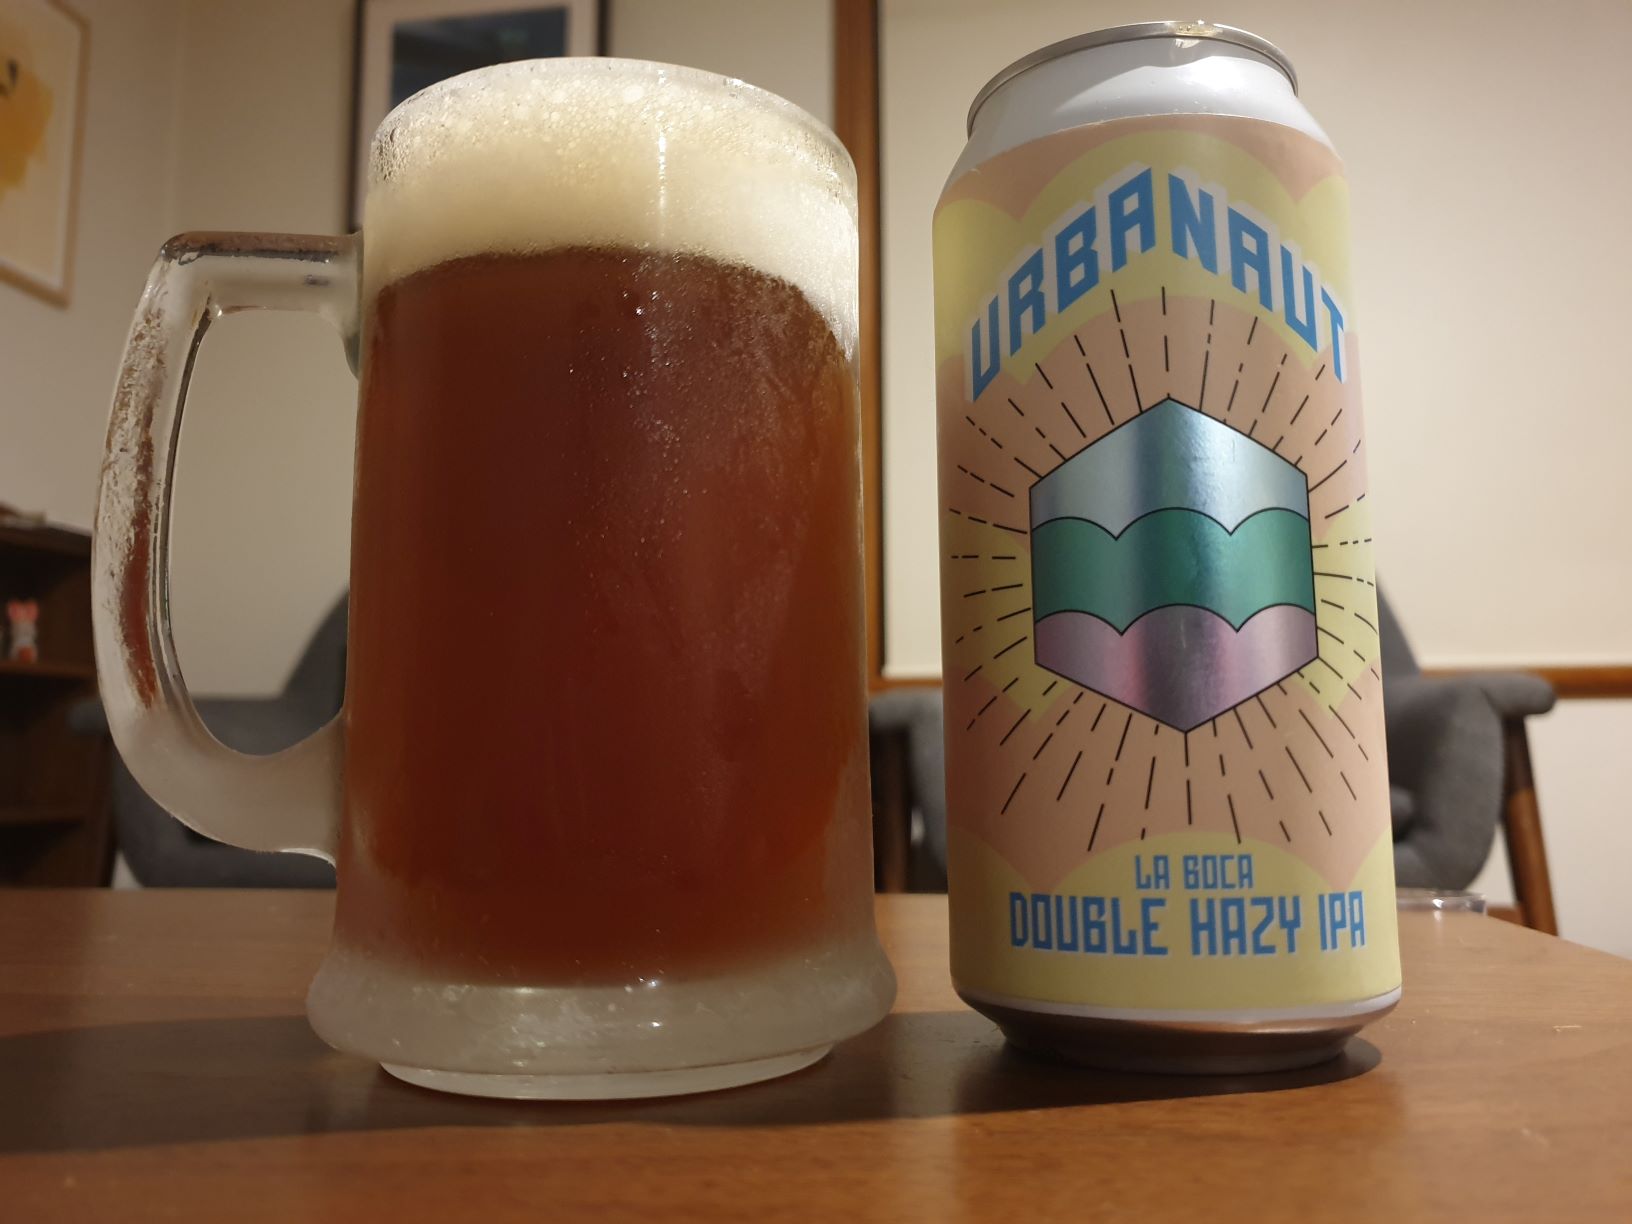 La Boca Double Hazy IPA by Urbanaut Brewery